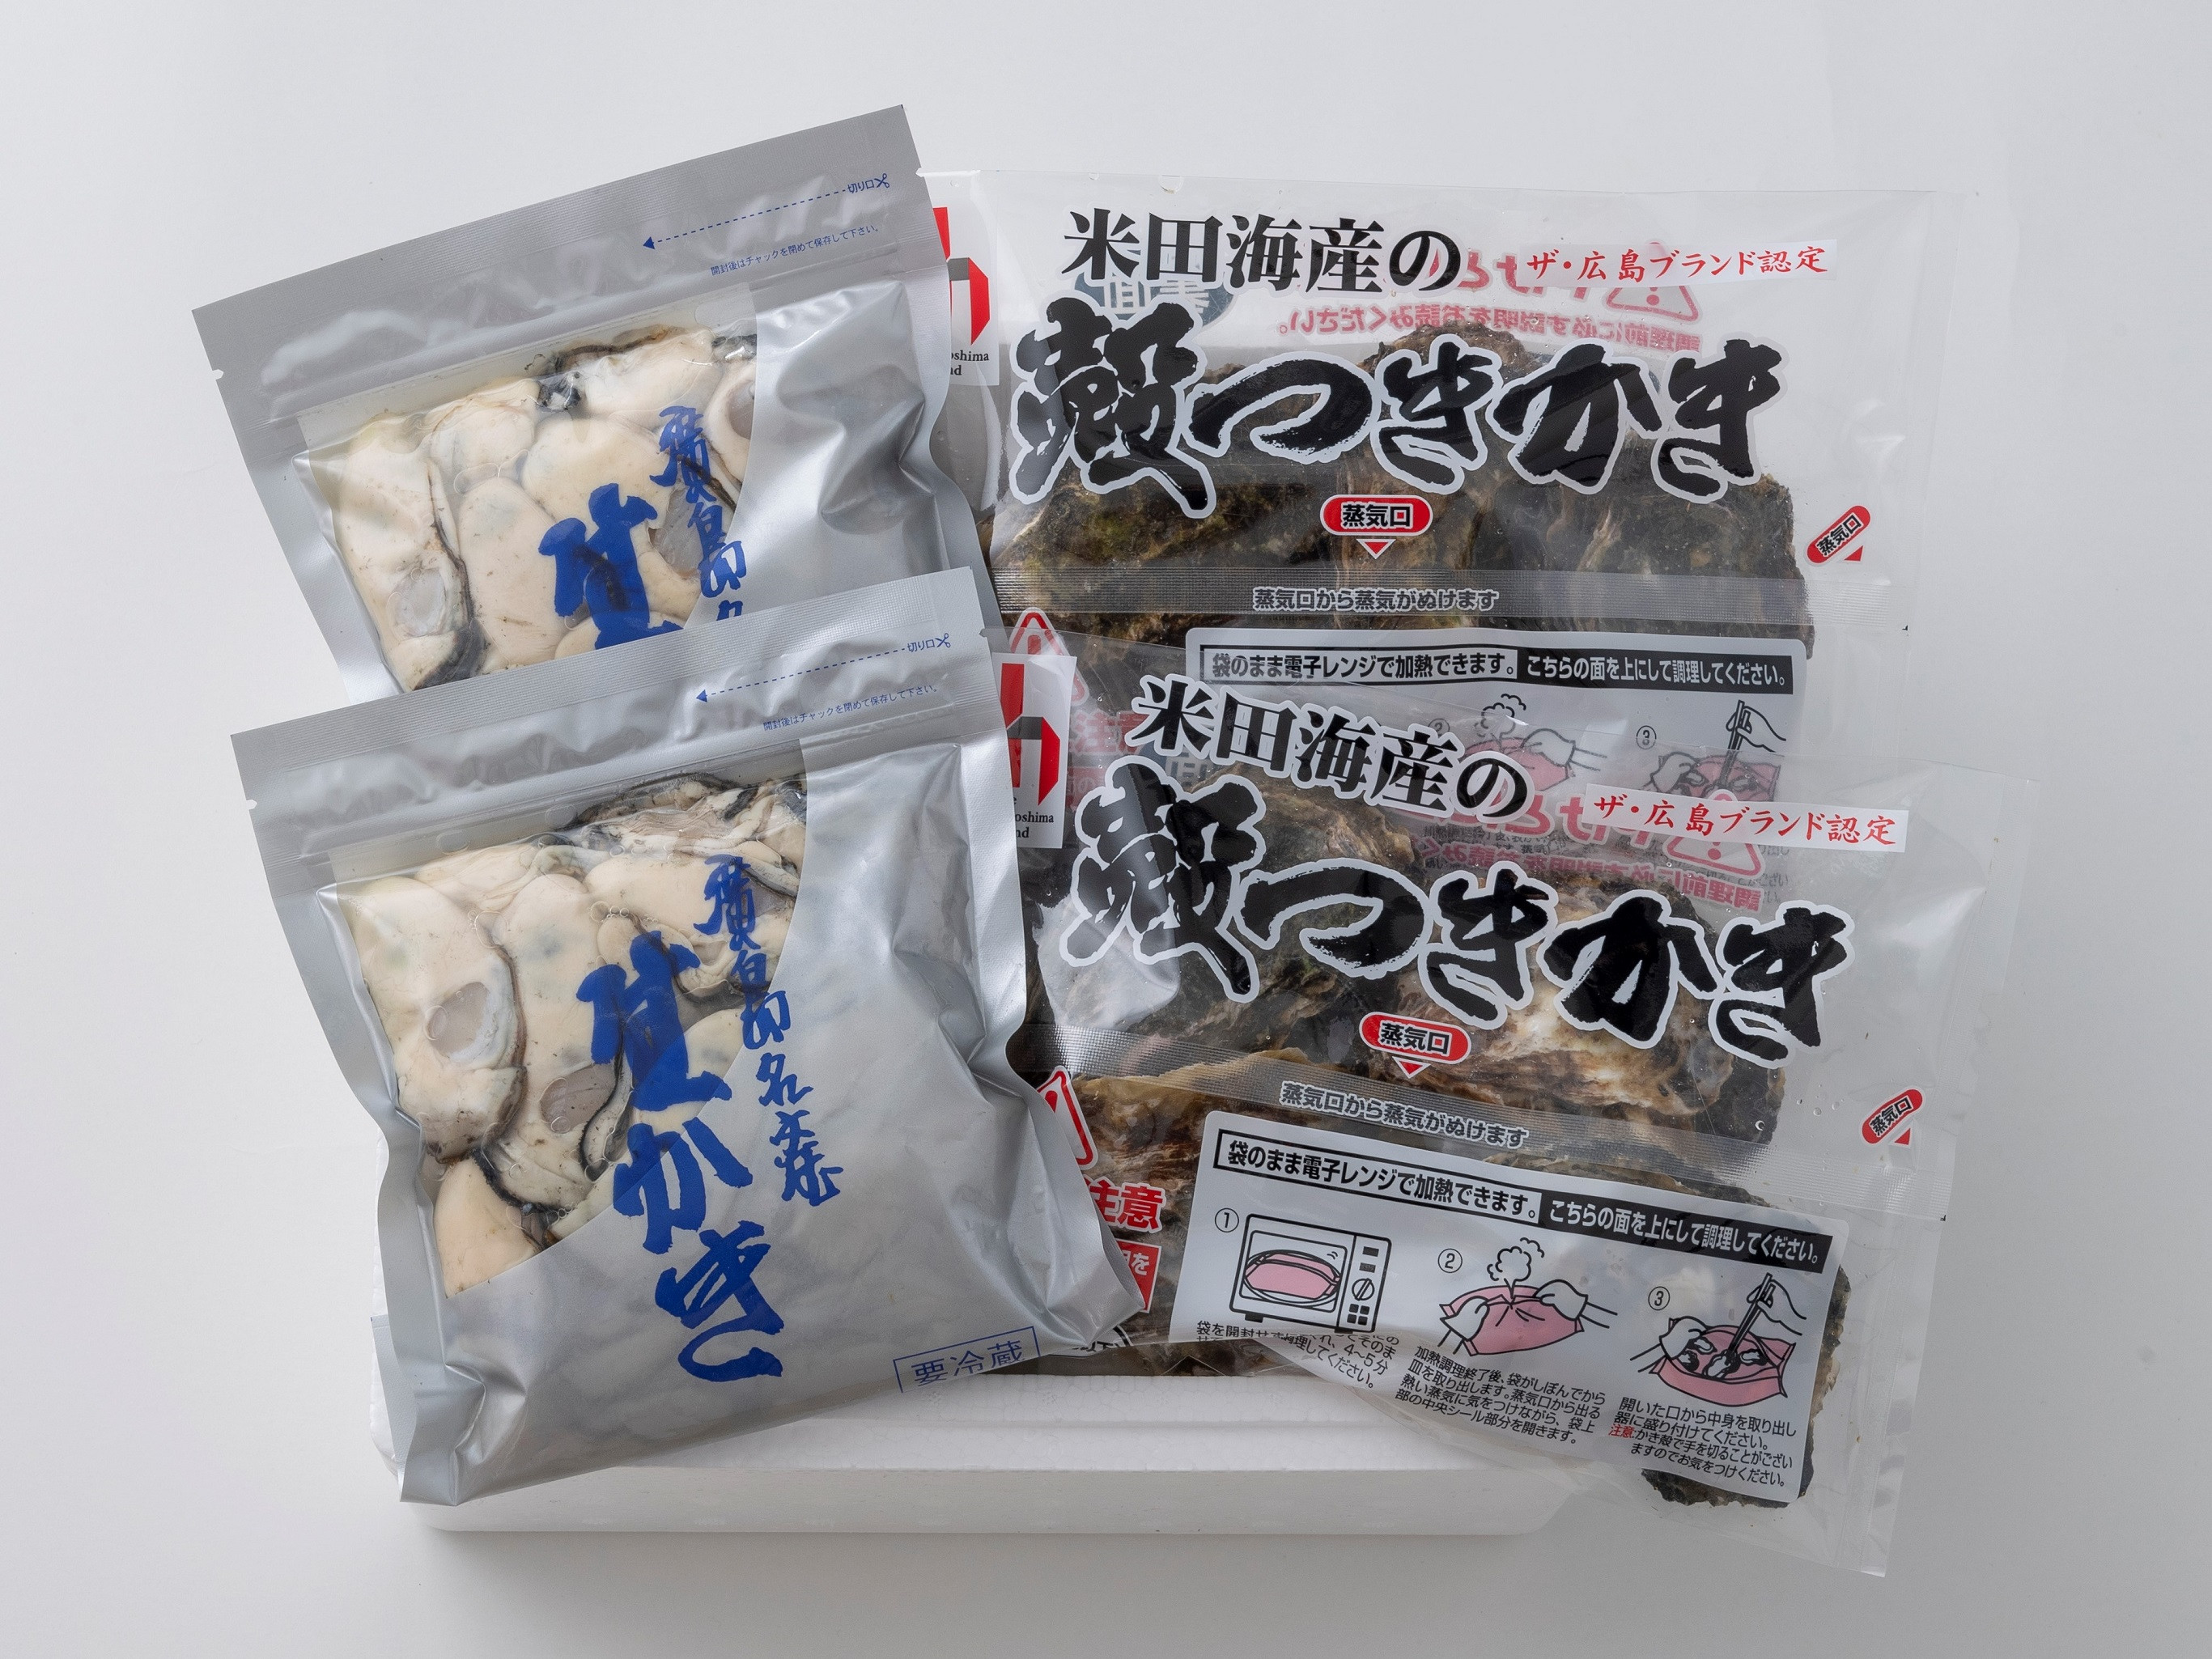 
Ｂ０１　米田海産の広島かき　むき身1㎏とレンジ専用袋入り殻付き(4個×2袋)
